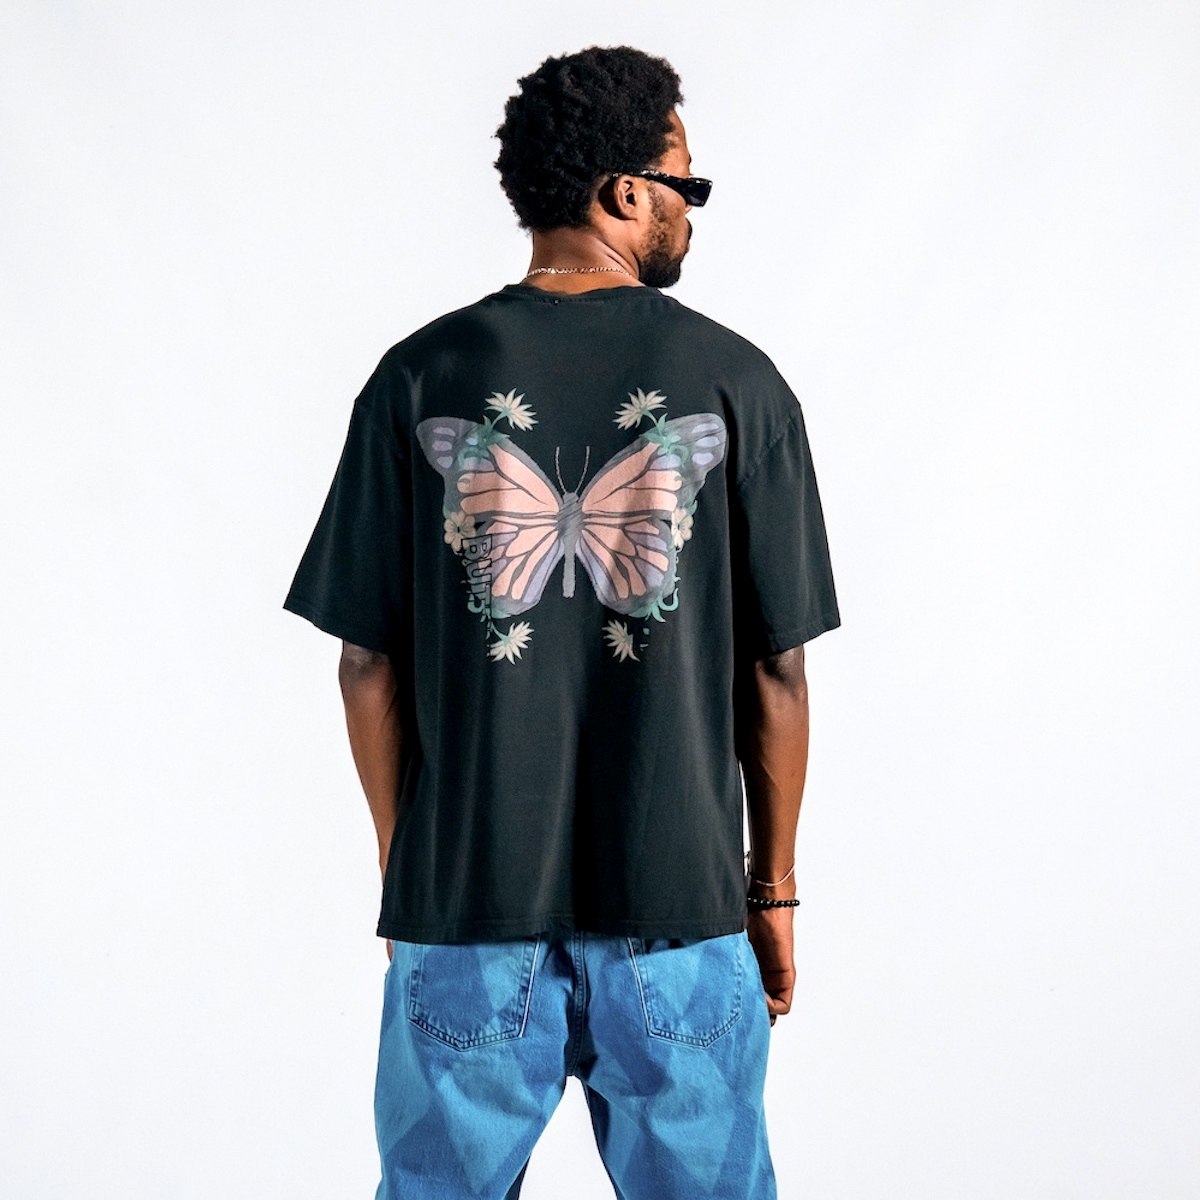 Camiseta masculina com estampa de borboleta e letras grandes pretas | Martin Valen